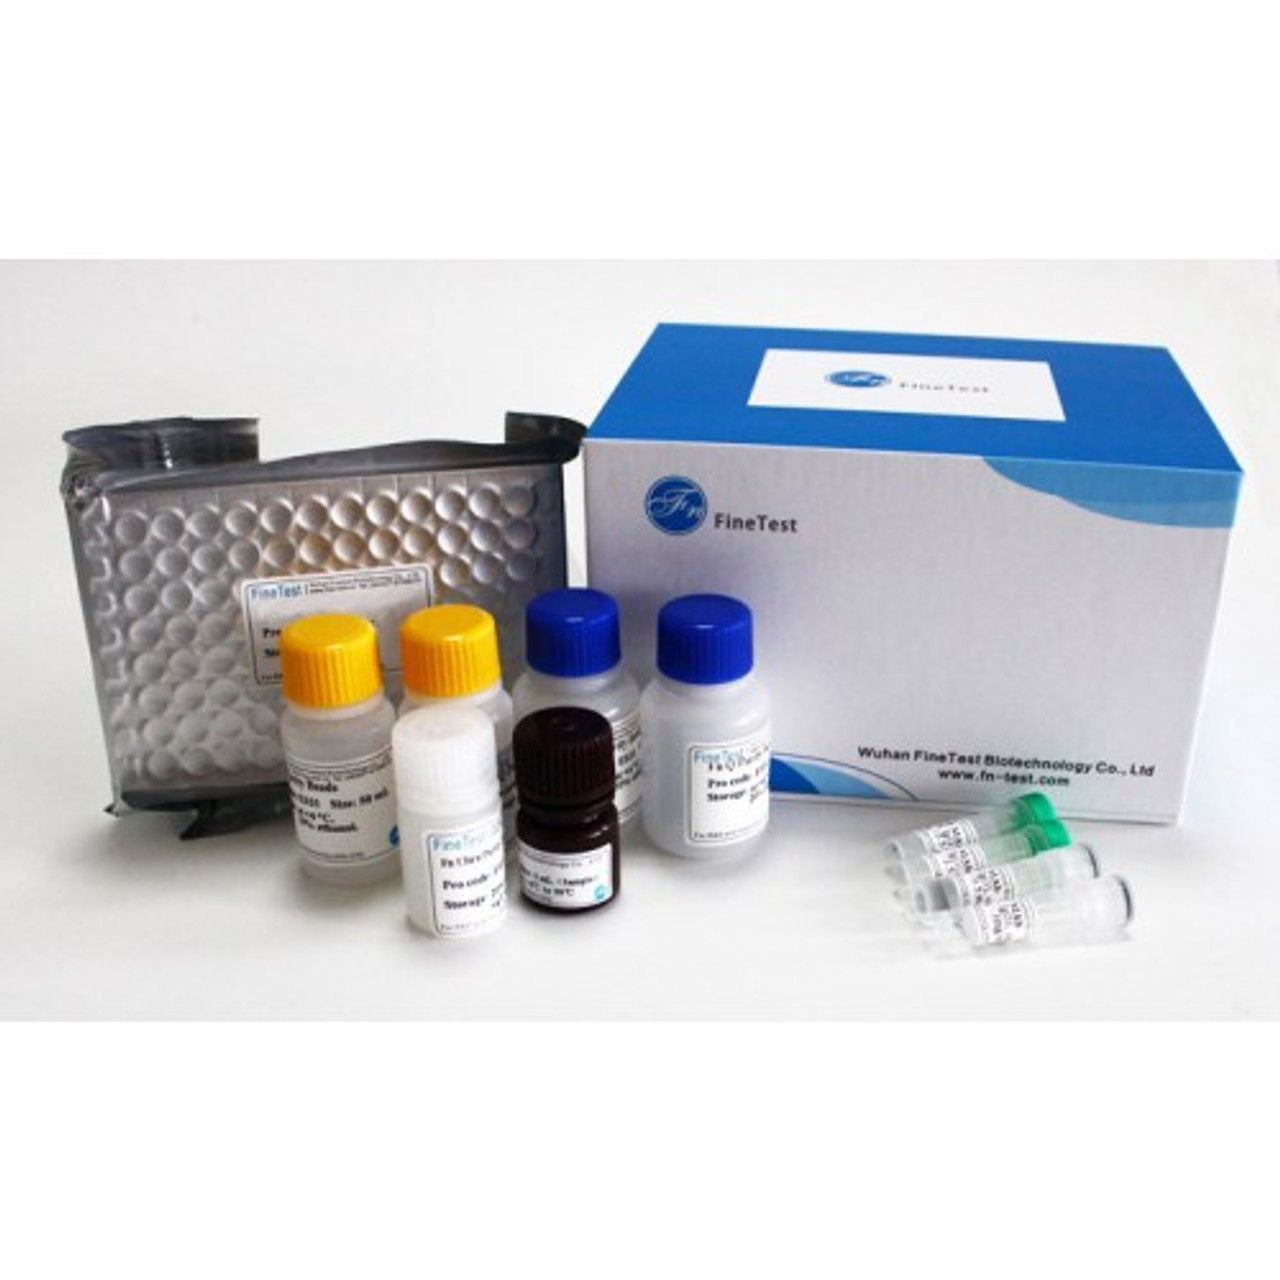 Human MAG Ab(Anti-Myelin Associated Glycoprotein Antibody) ELISA Kit